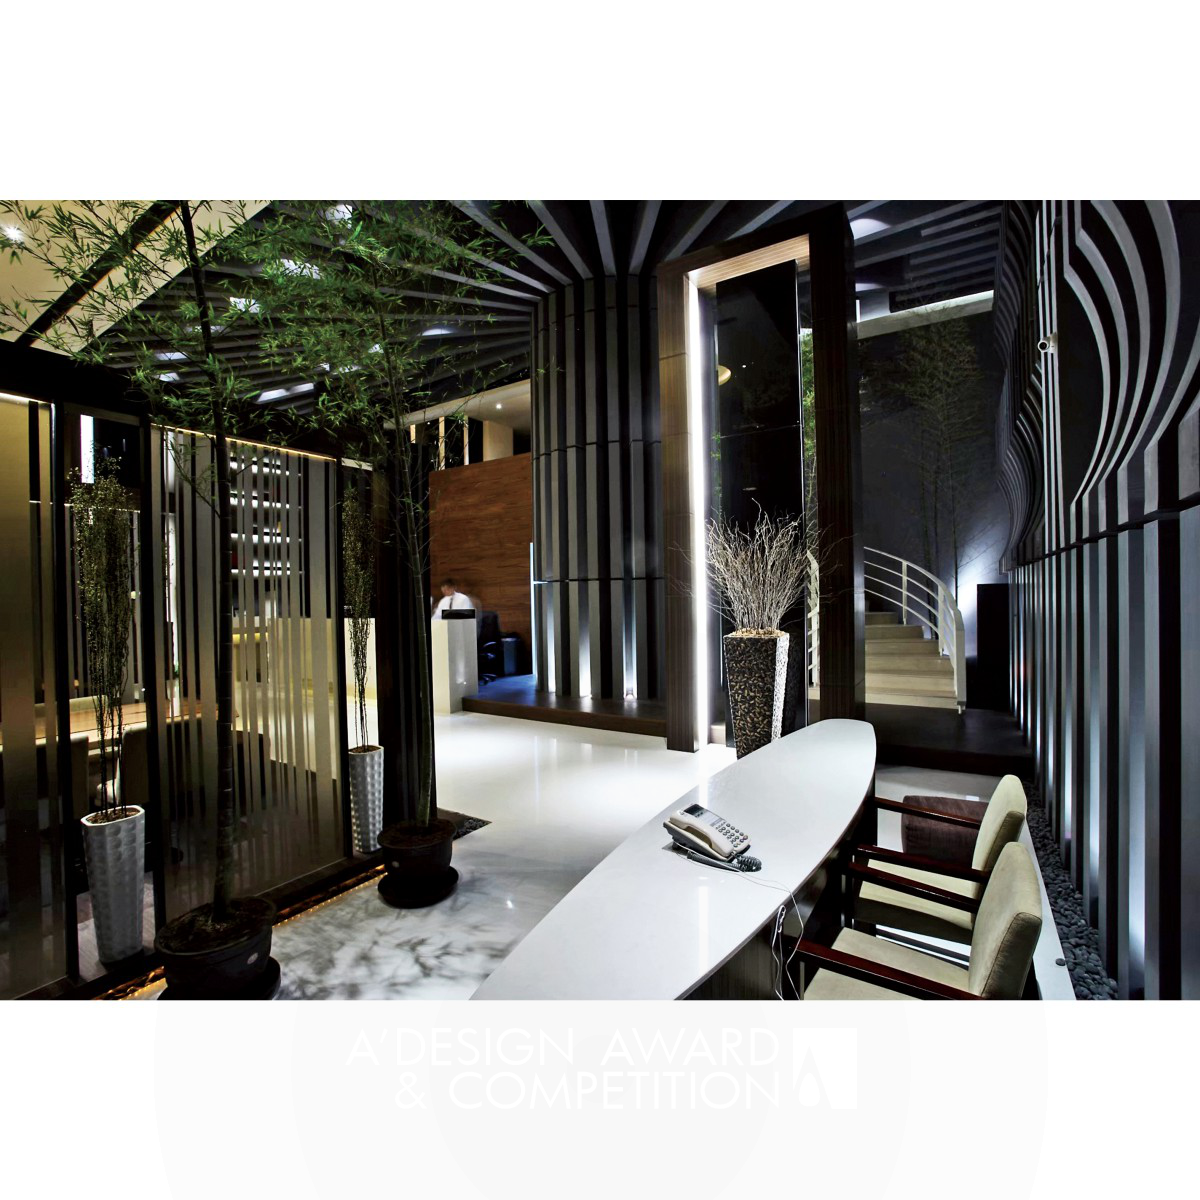 Oriental Zen Reception Center by Yung Hsi Peng  Pei Chi Hung  Parn Shyr